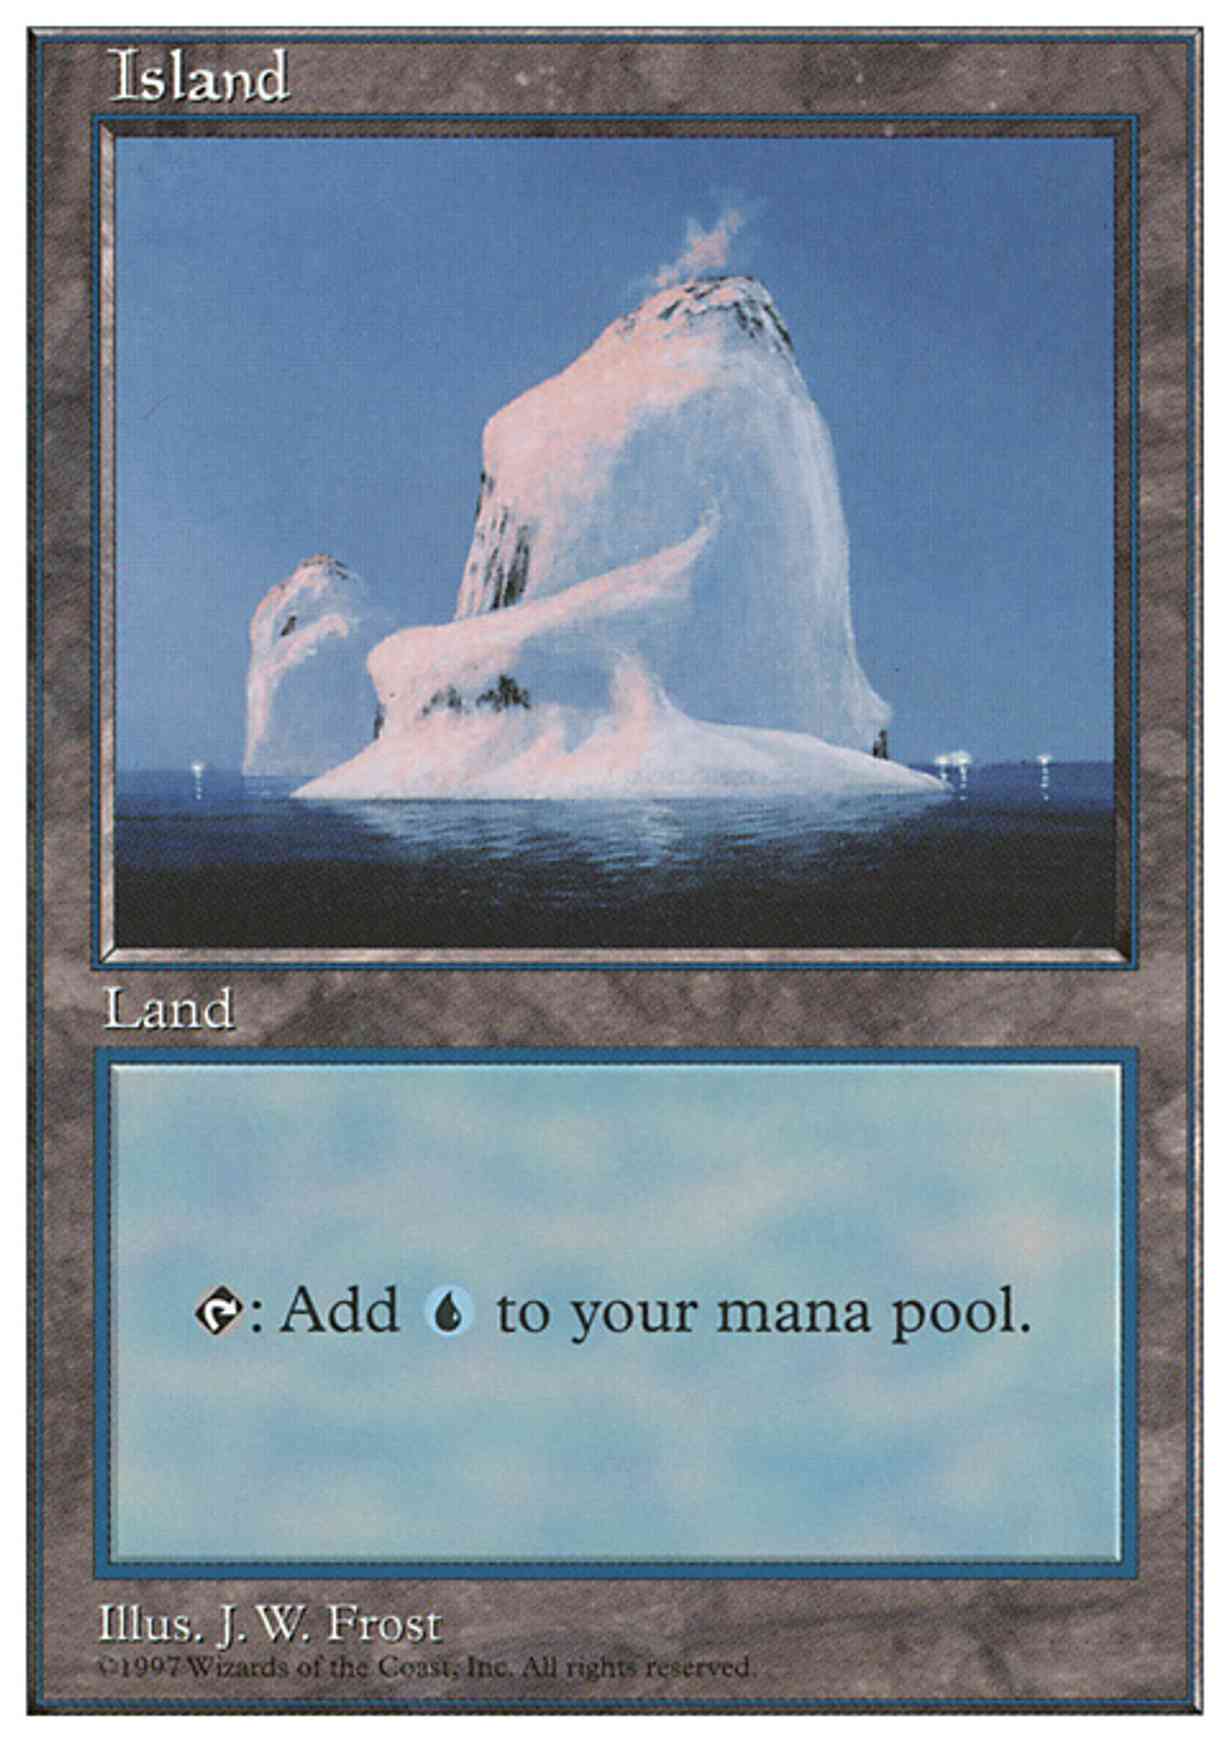 Island (437) magic card front